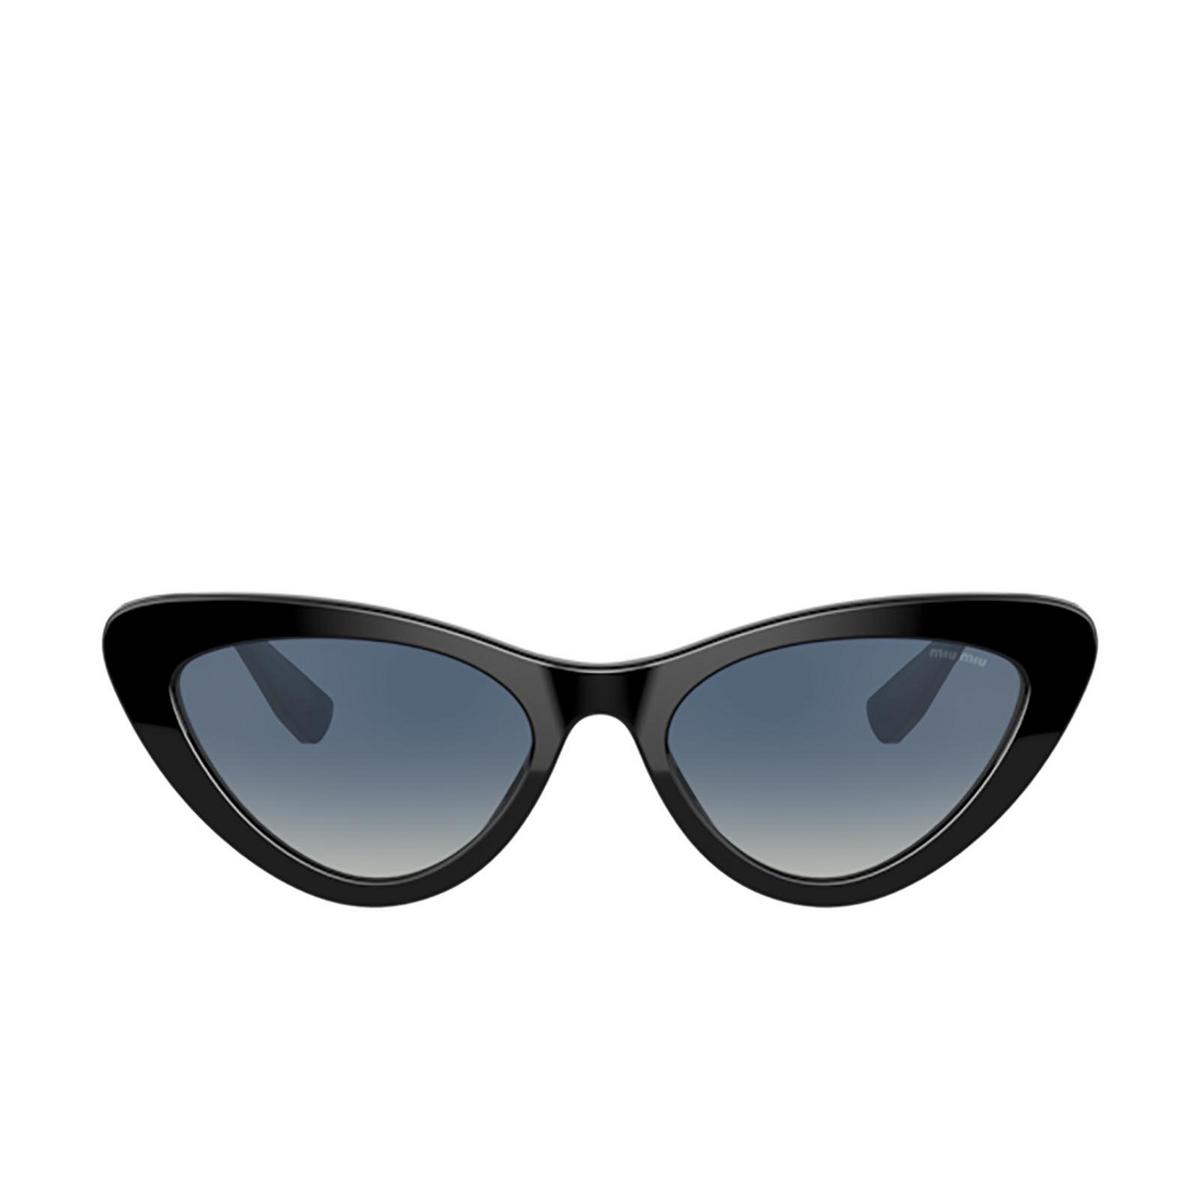 Miu Miu® Cat-eye Sunglasses: MU 01VS color Black 1AB3A0 - front view.